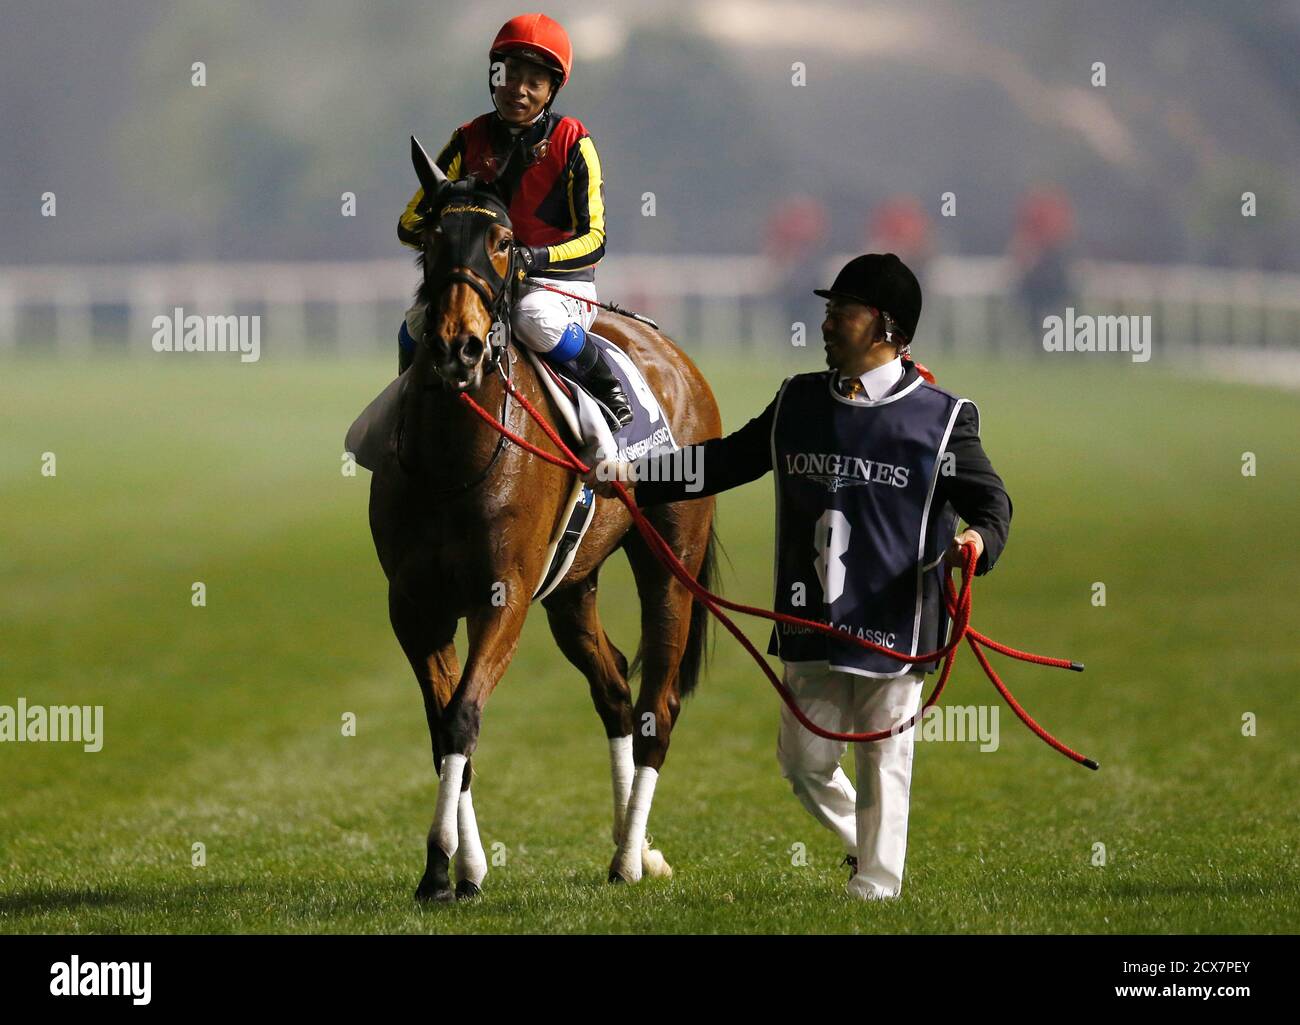 Yasunari Iwata, riding Gentildonna of Japan, returns after the eighth race 'Dubai Sheema Classic' during the Dubai World Cup at the Meydan Racecourse in Dubai March 30, 2013. REUTERS/Ahmed Jadallah (UNITED ARAB EMIRATES - Tags: SPORT HORSE RACING) Stock Photo